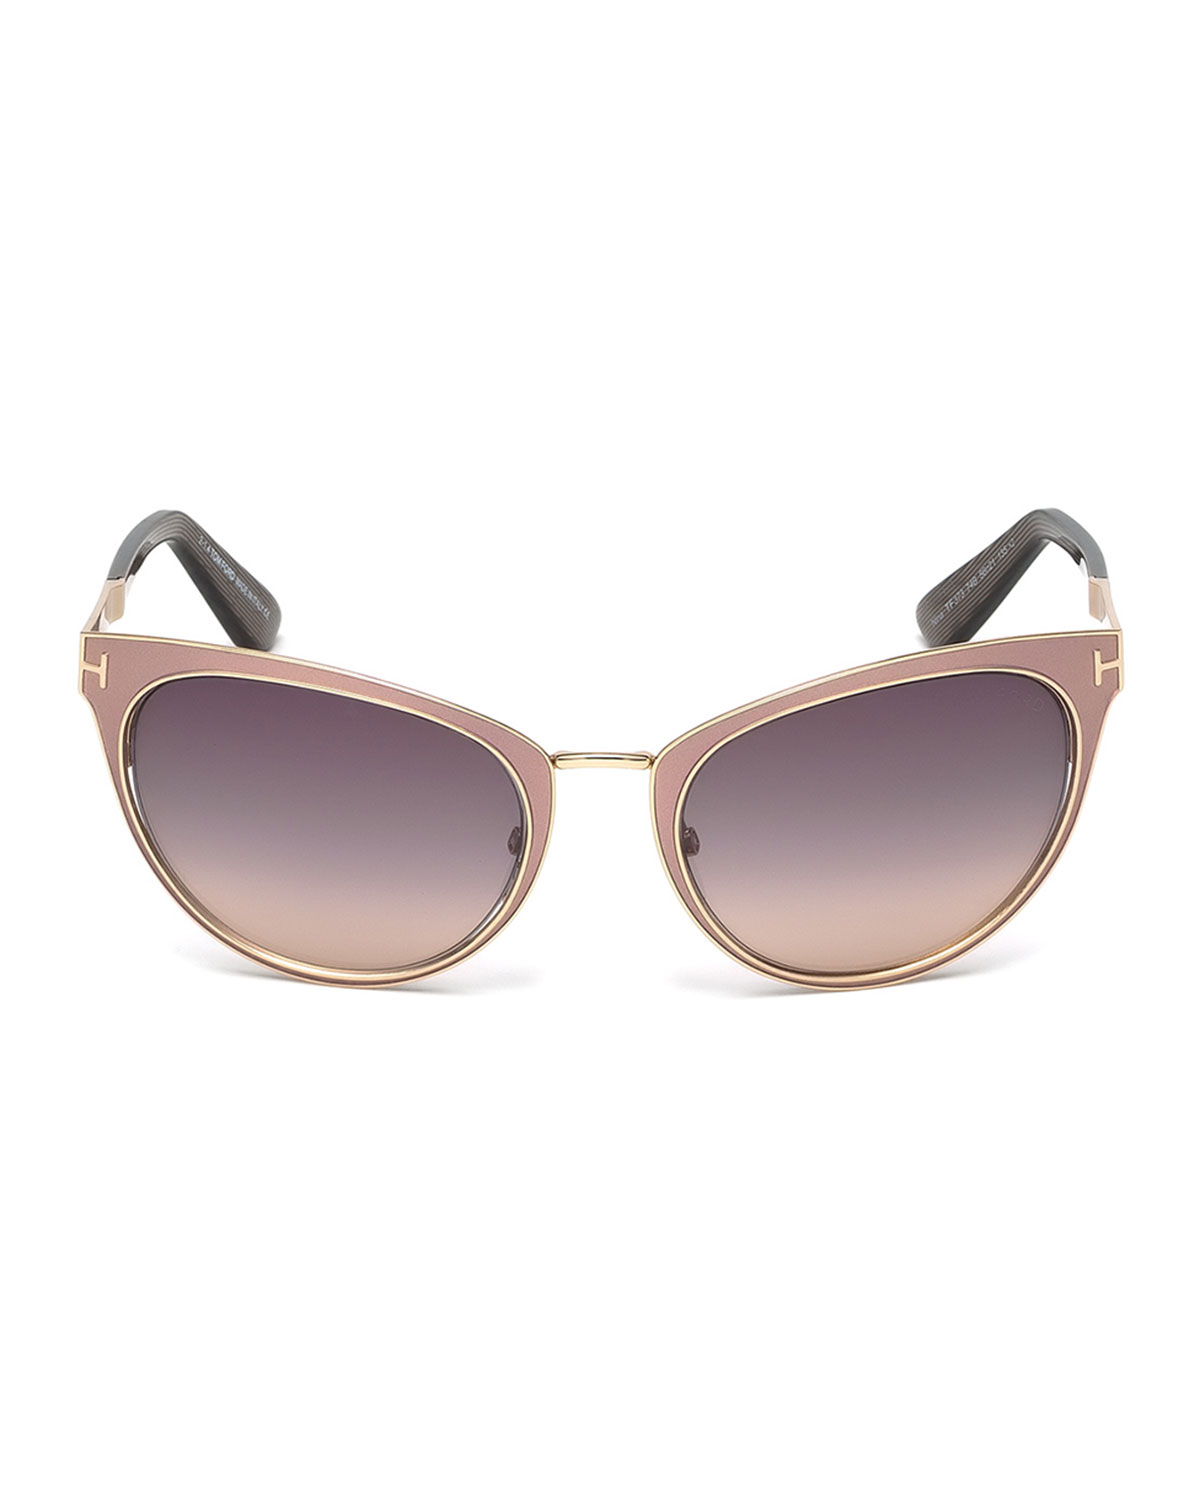 Tom Ford Nina Cat Eye Sunglasses In Rose Goldnude Pink Lyst 